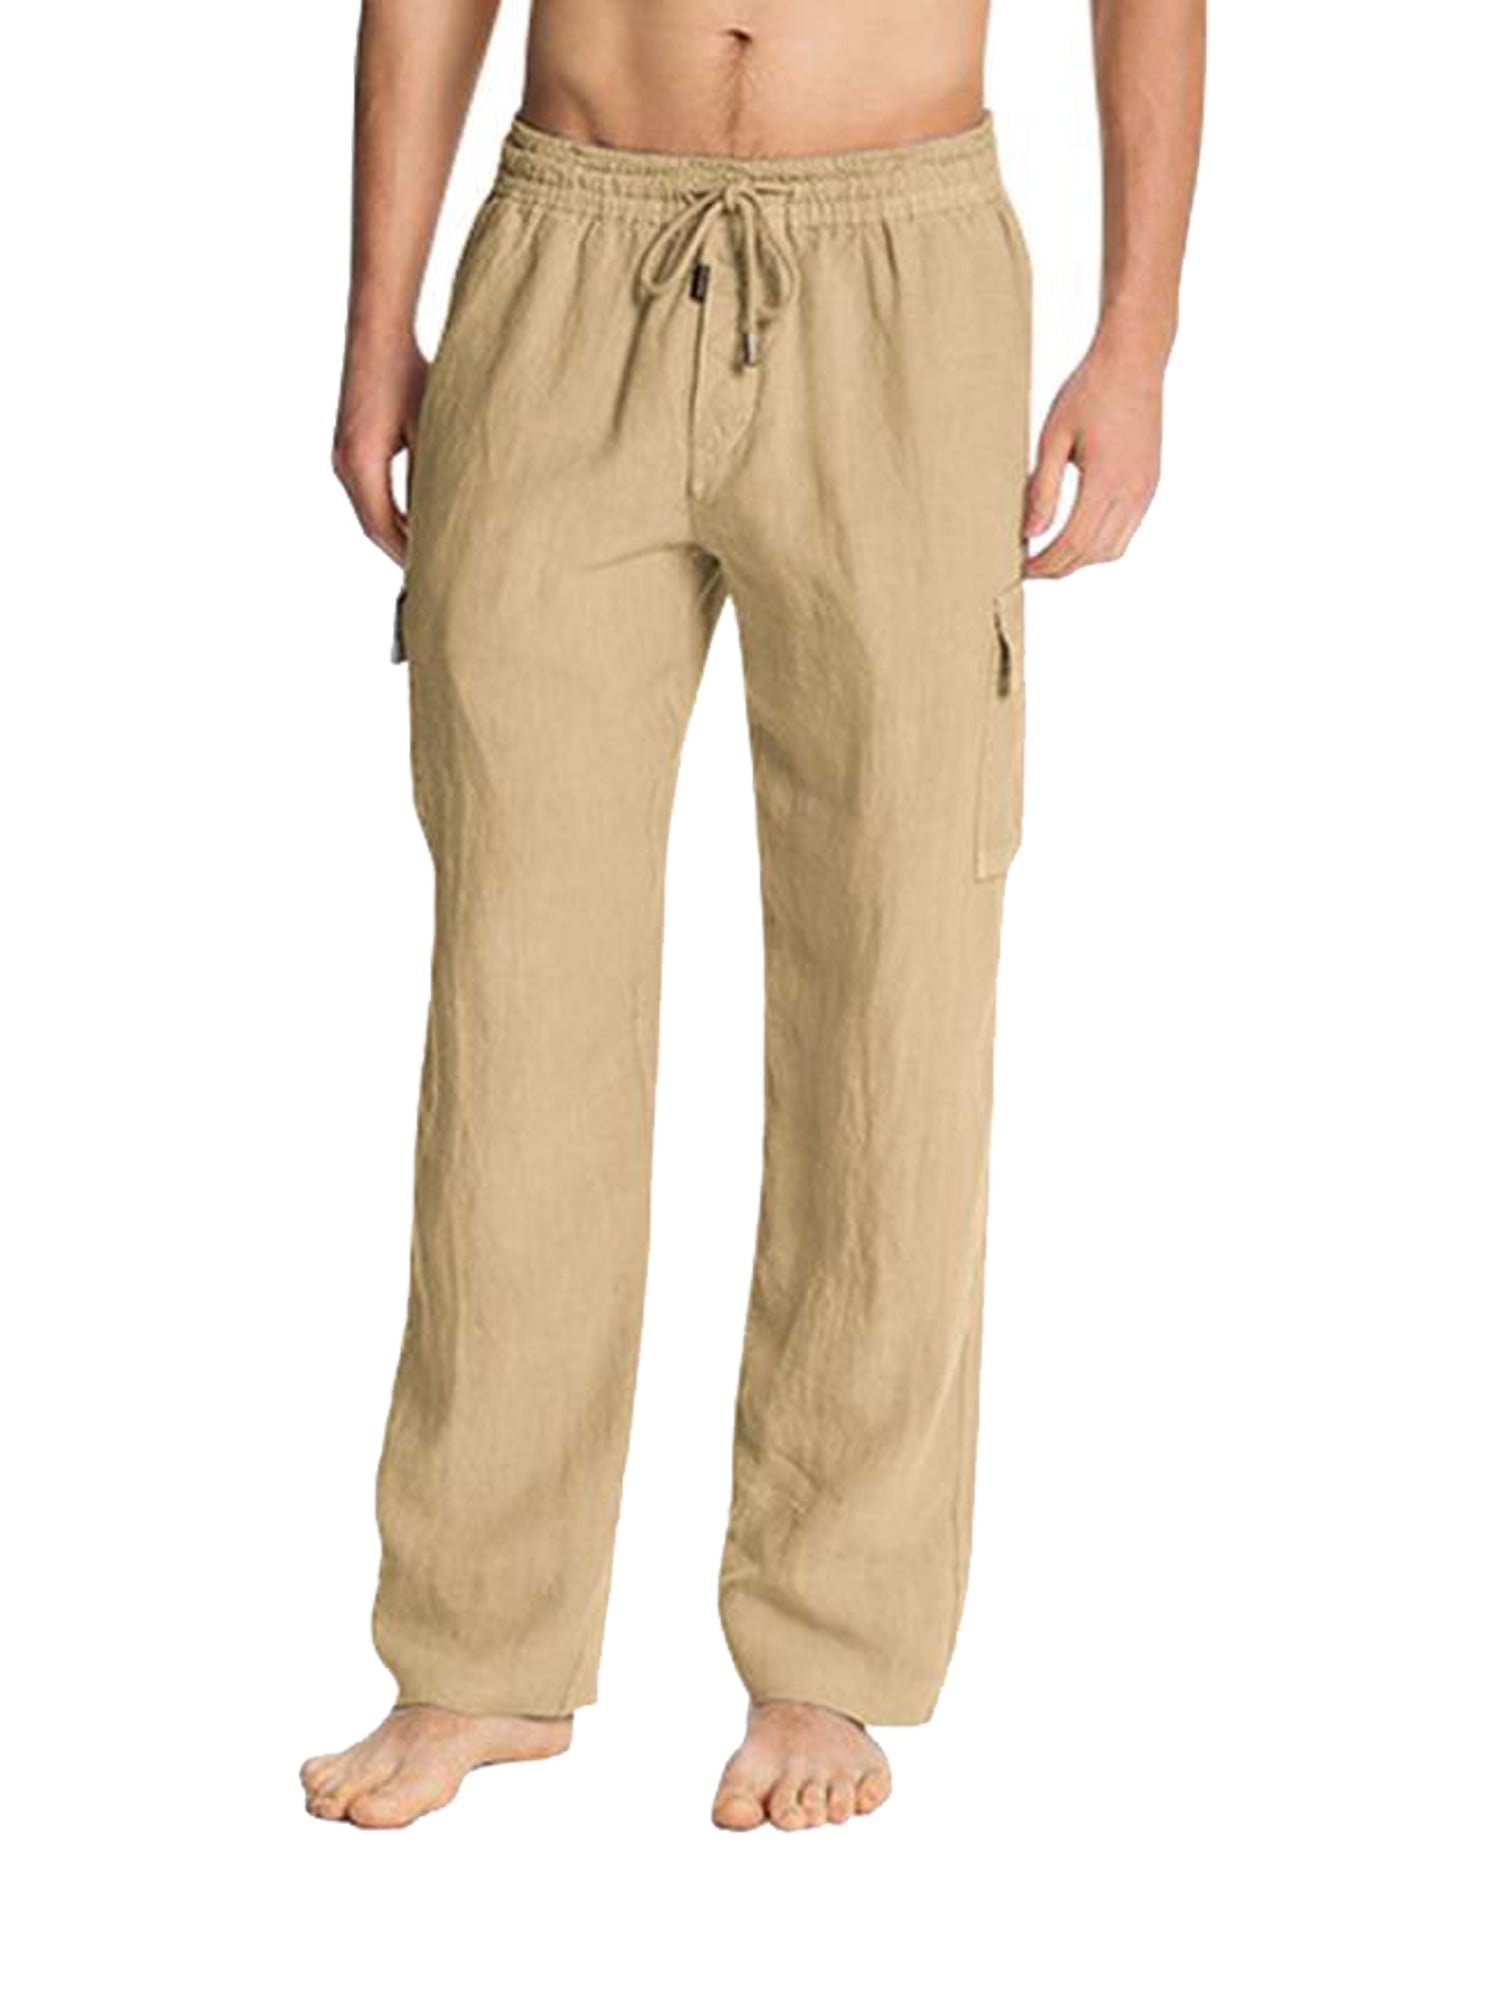 UKAP - Men's Drawstring Cotton Linen Pants Solid Color Elastic Waist ...